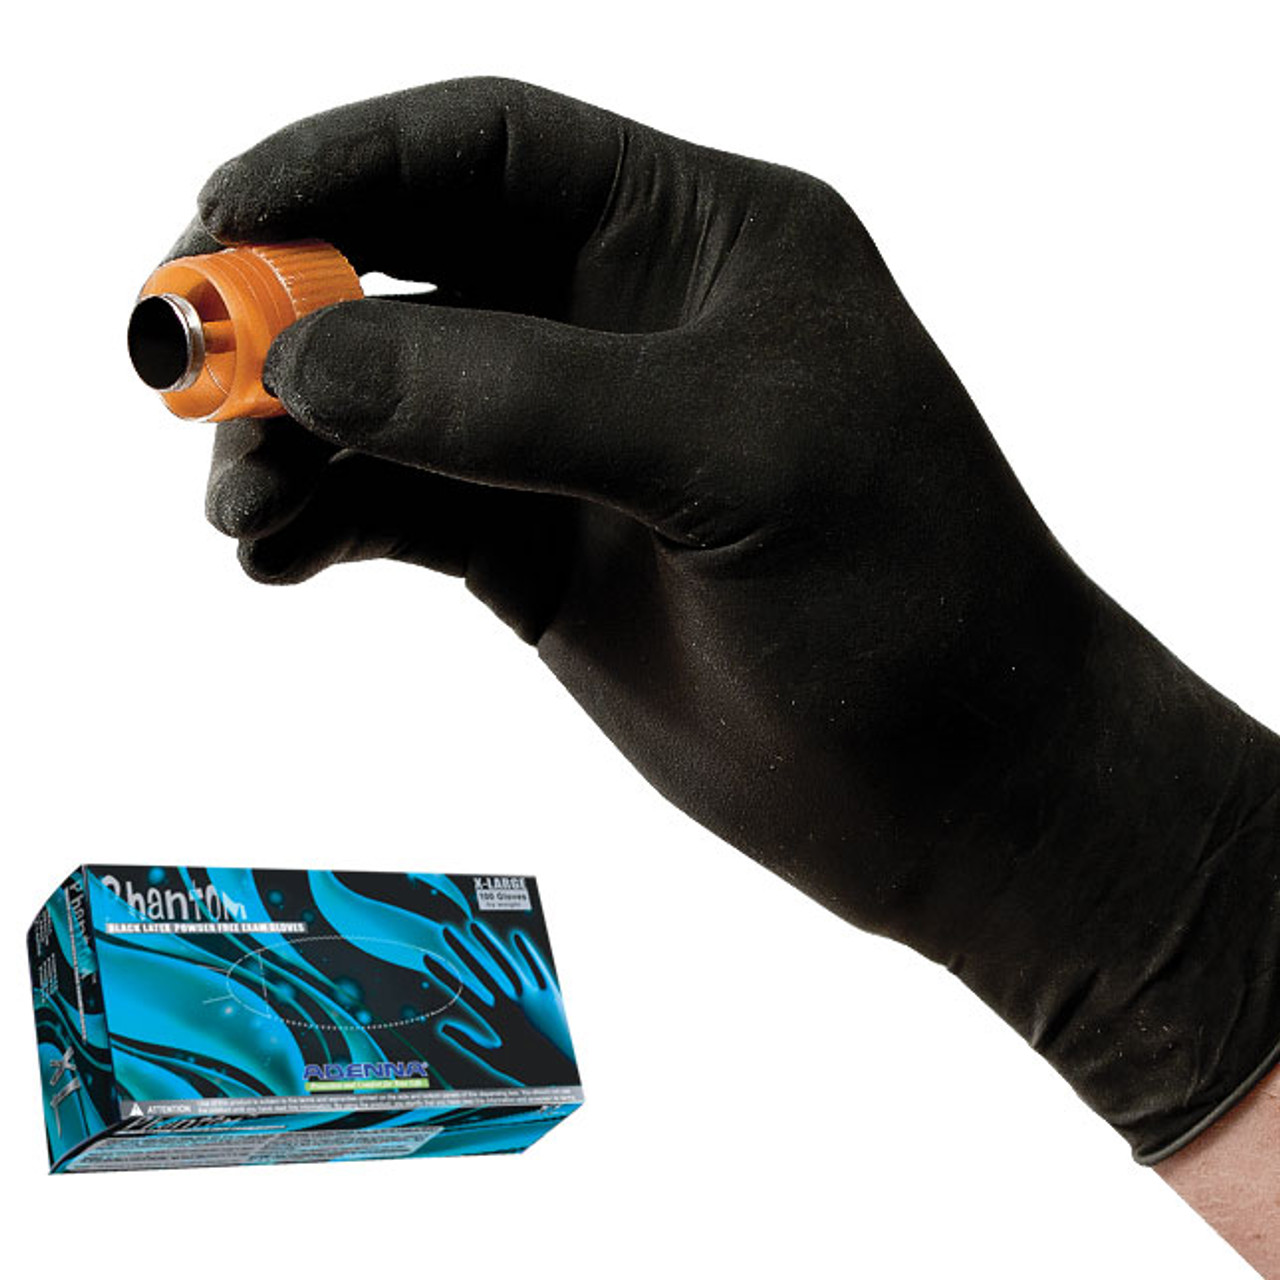 Personal Protection - Gloves - Adenna Phantom Latex Gloves - A